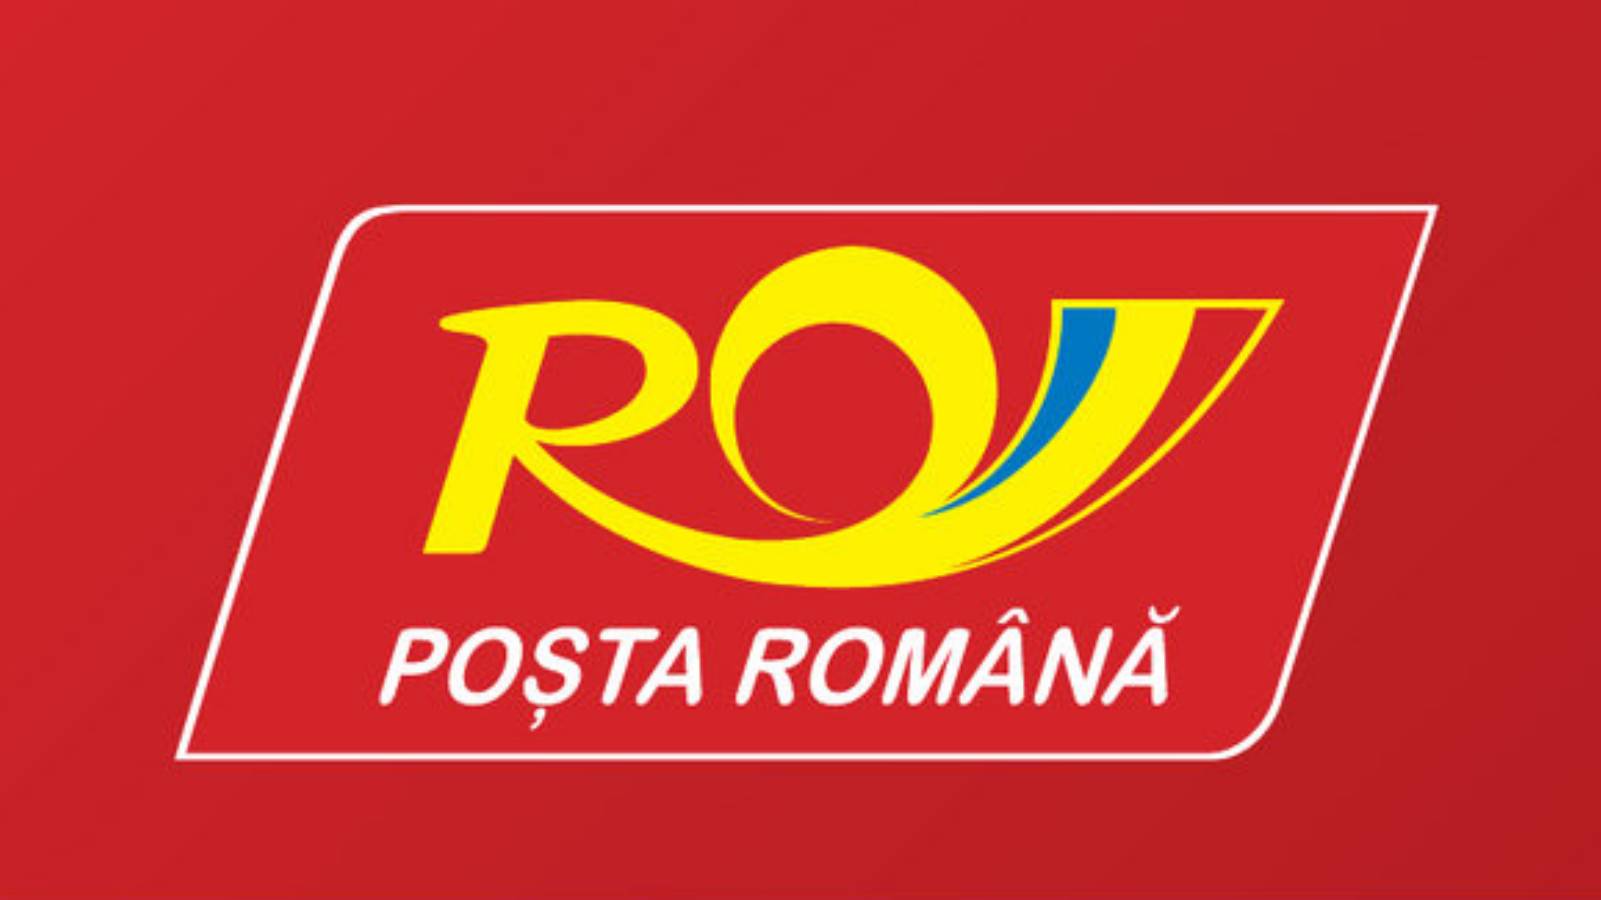 Posta Romana Mesajul Surprinzator Nu Stiau Romani